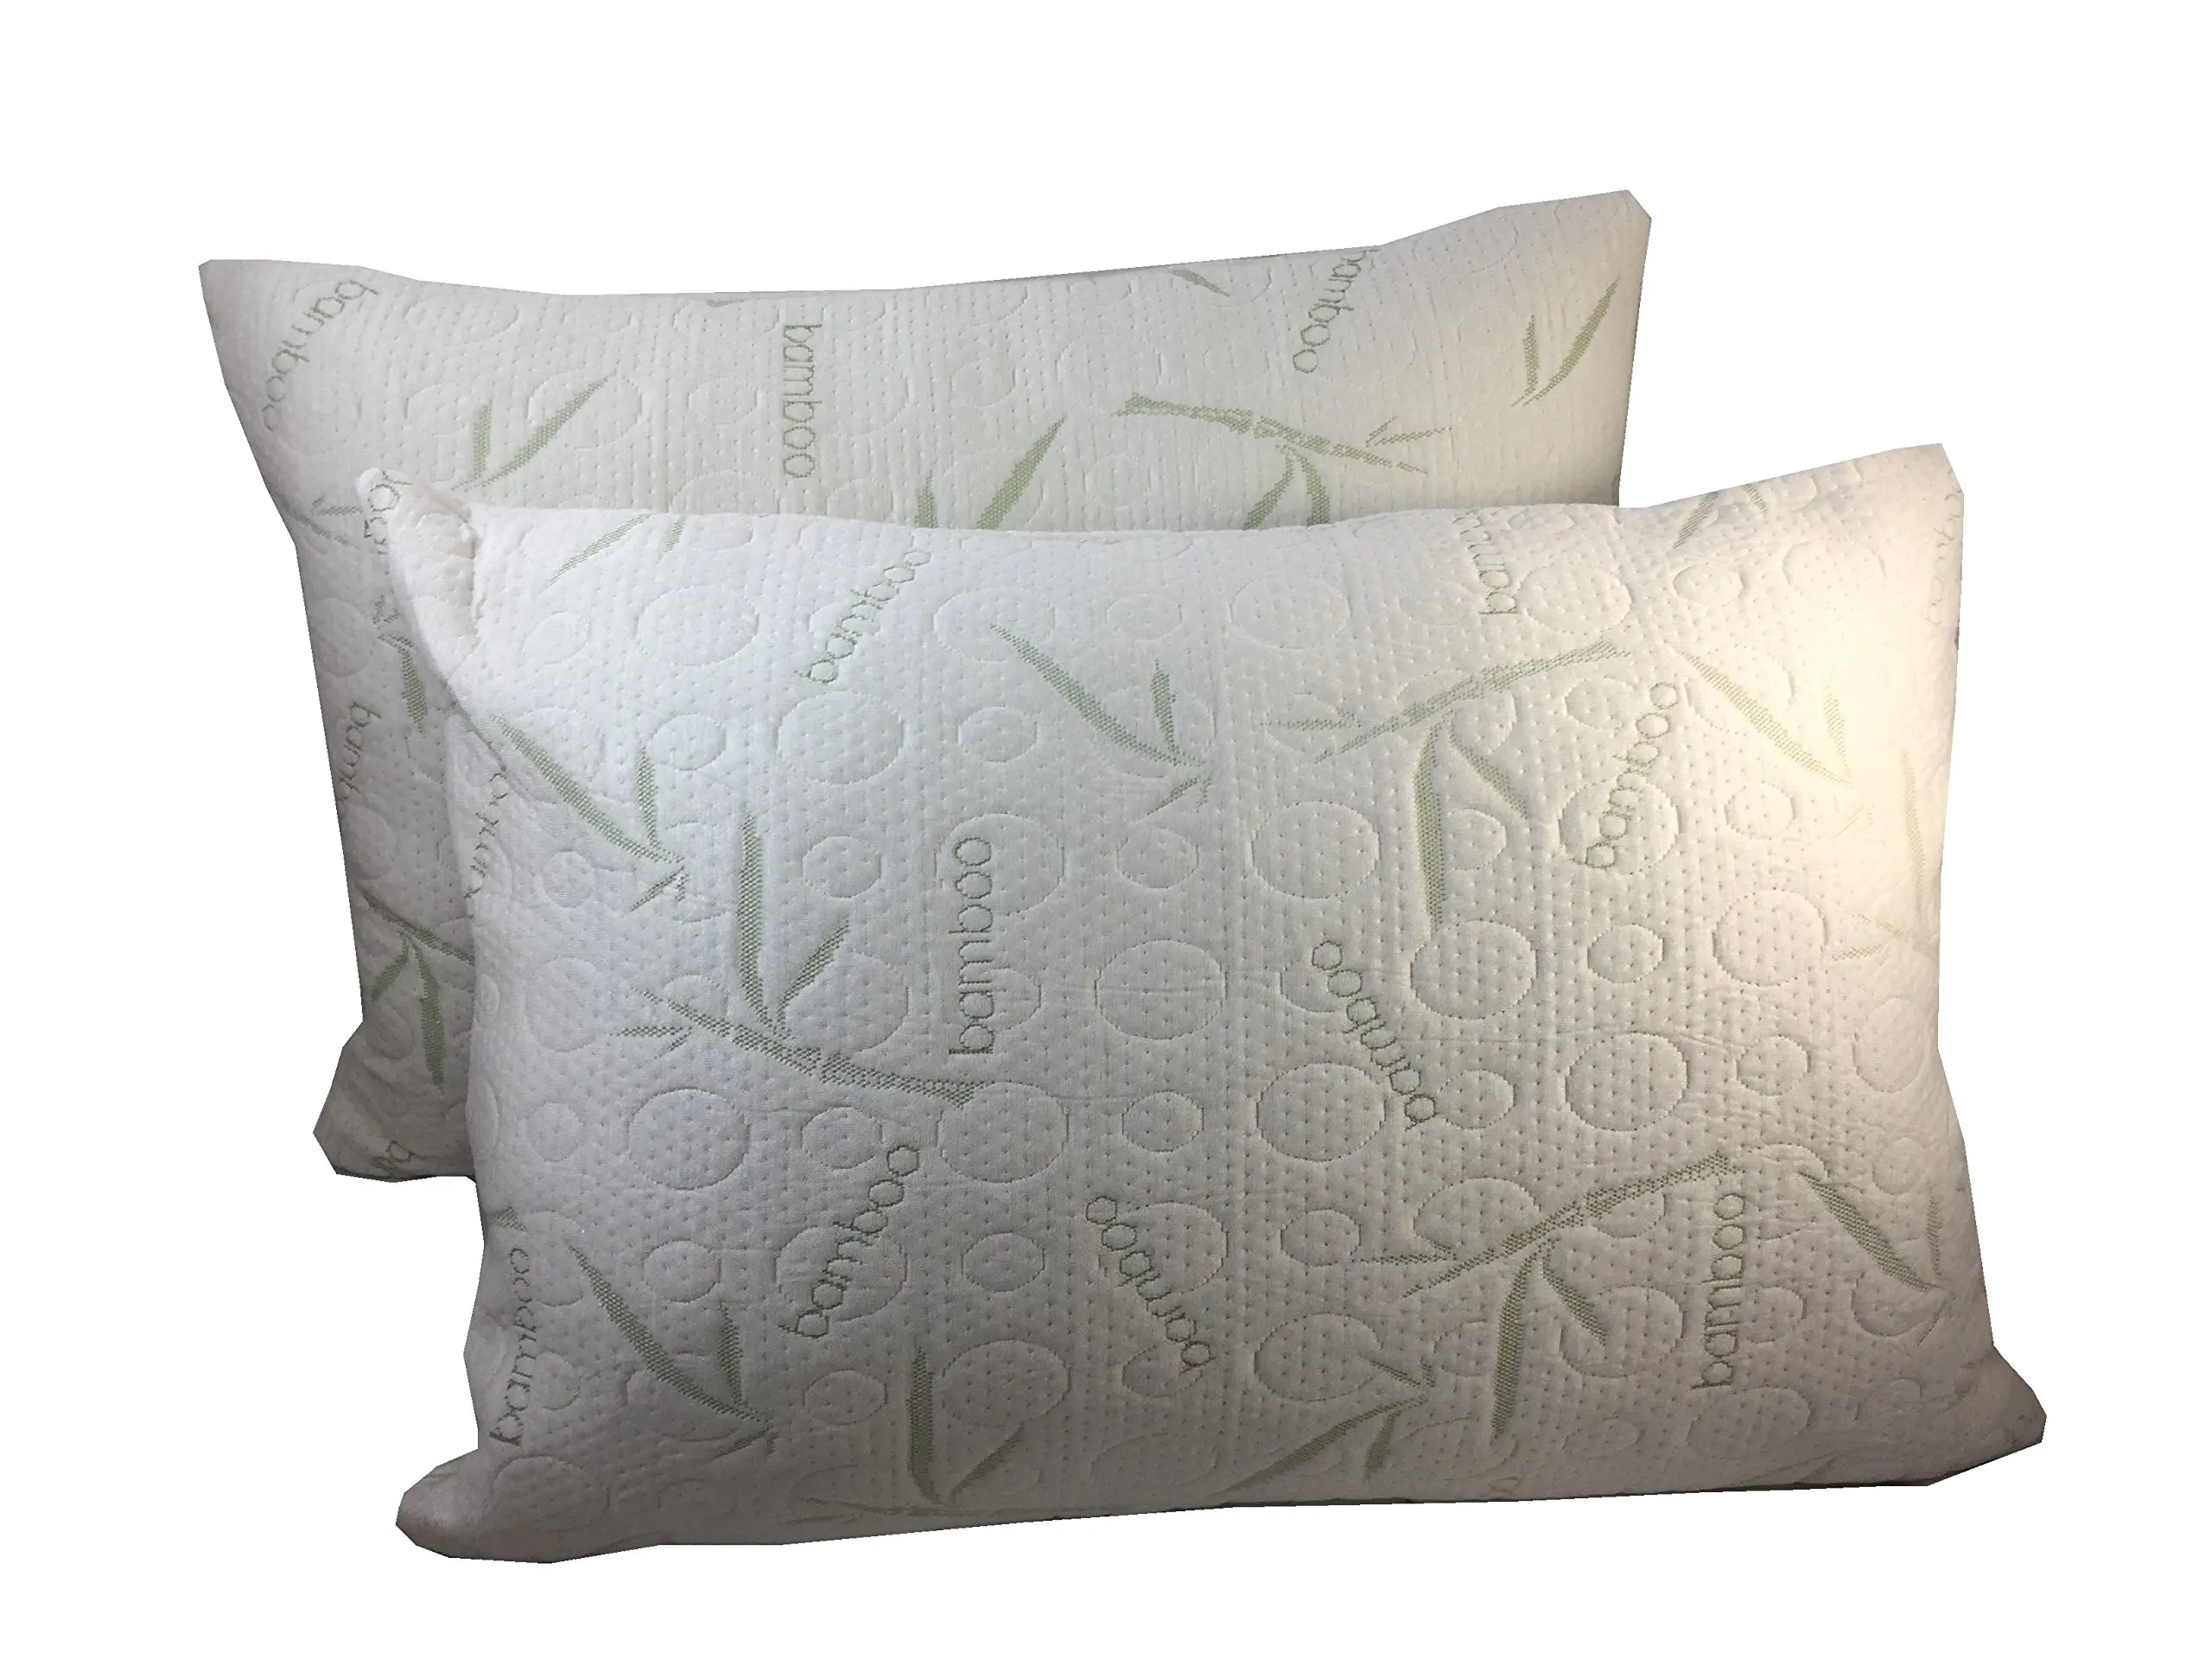 Miracle Bamboo Pillows Memory Foam Pillow, Soft Premium Shredded Memory Foa...